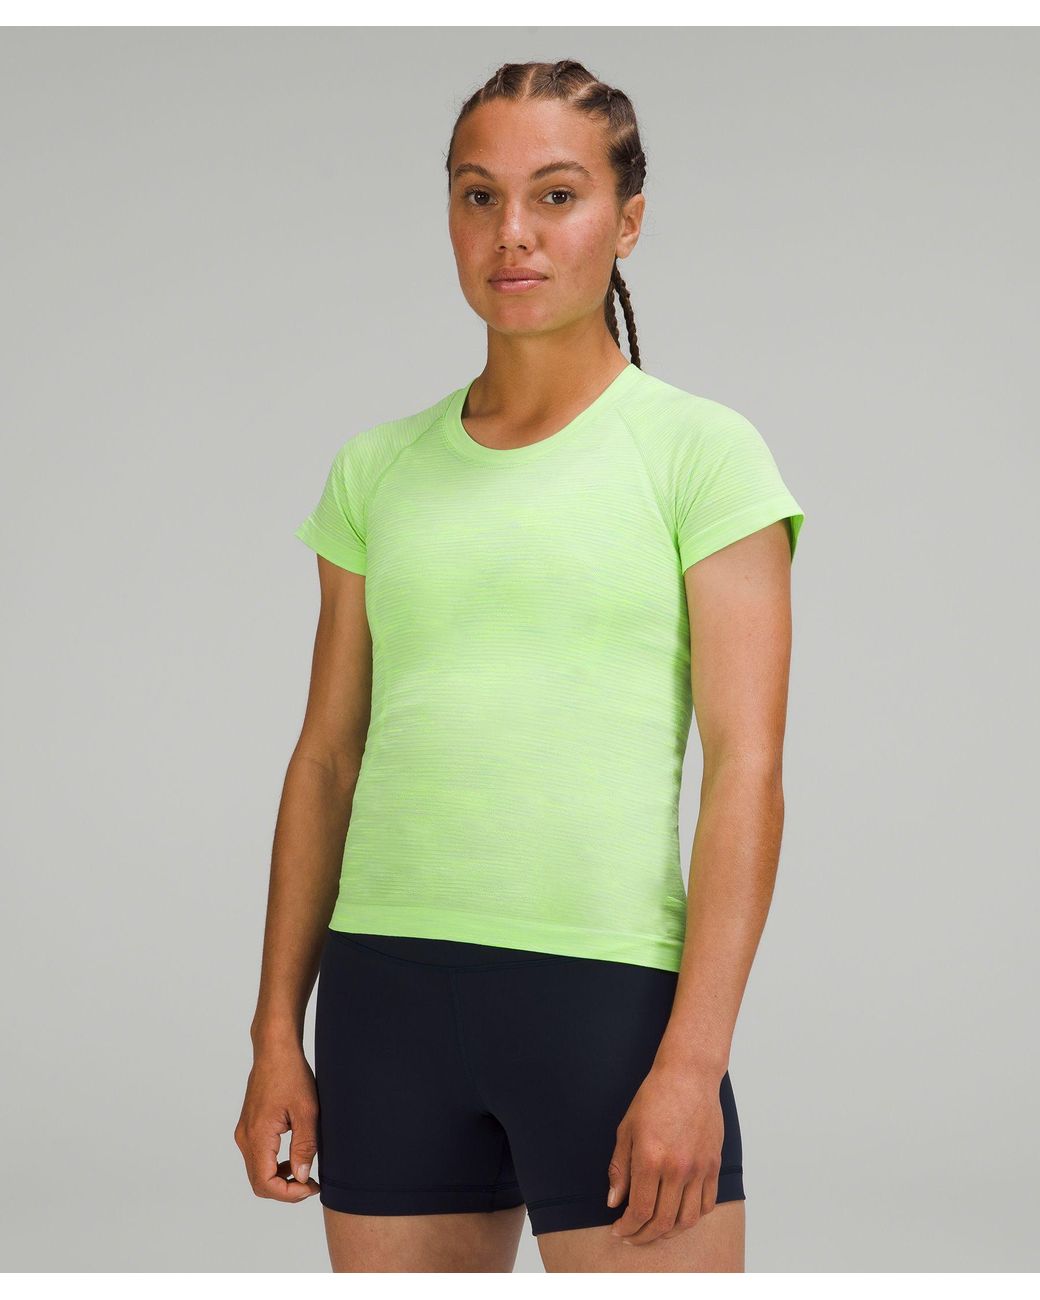 lululemon athletica Swiftly Tech Short Sleeve Shirt 2.0 Race Length in  Green